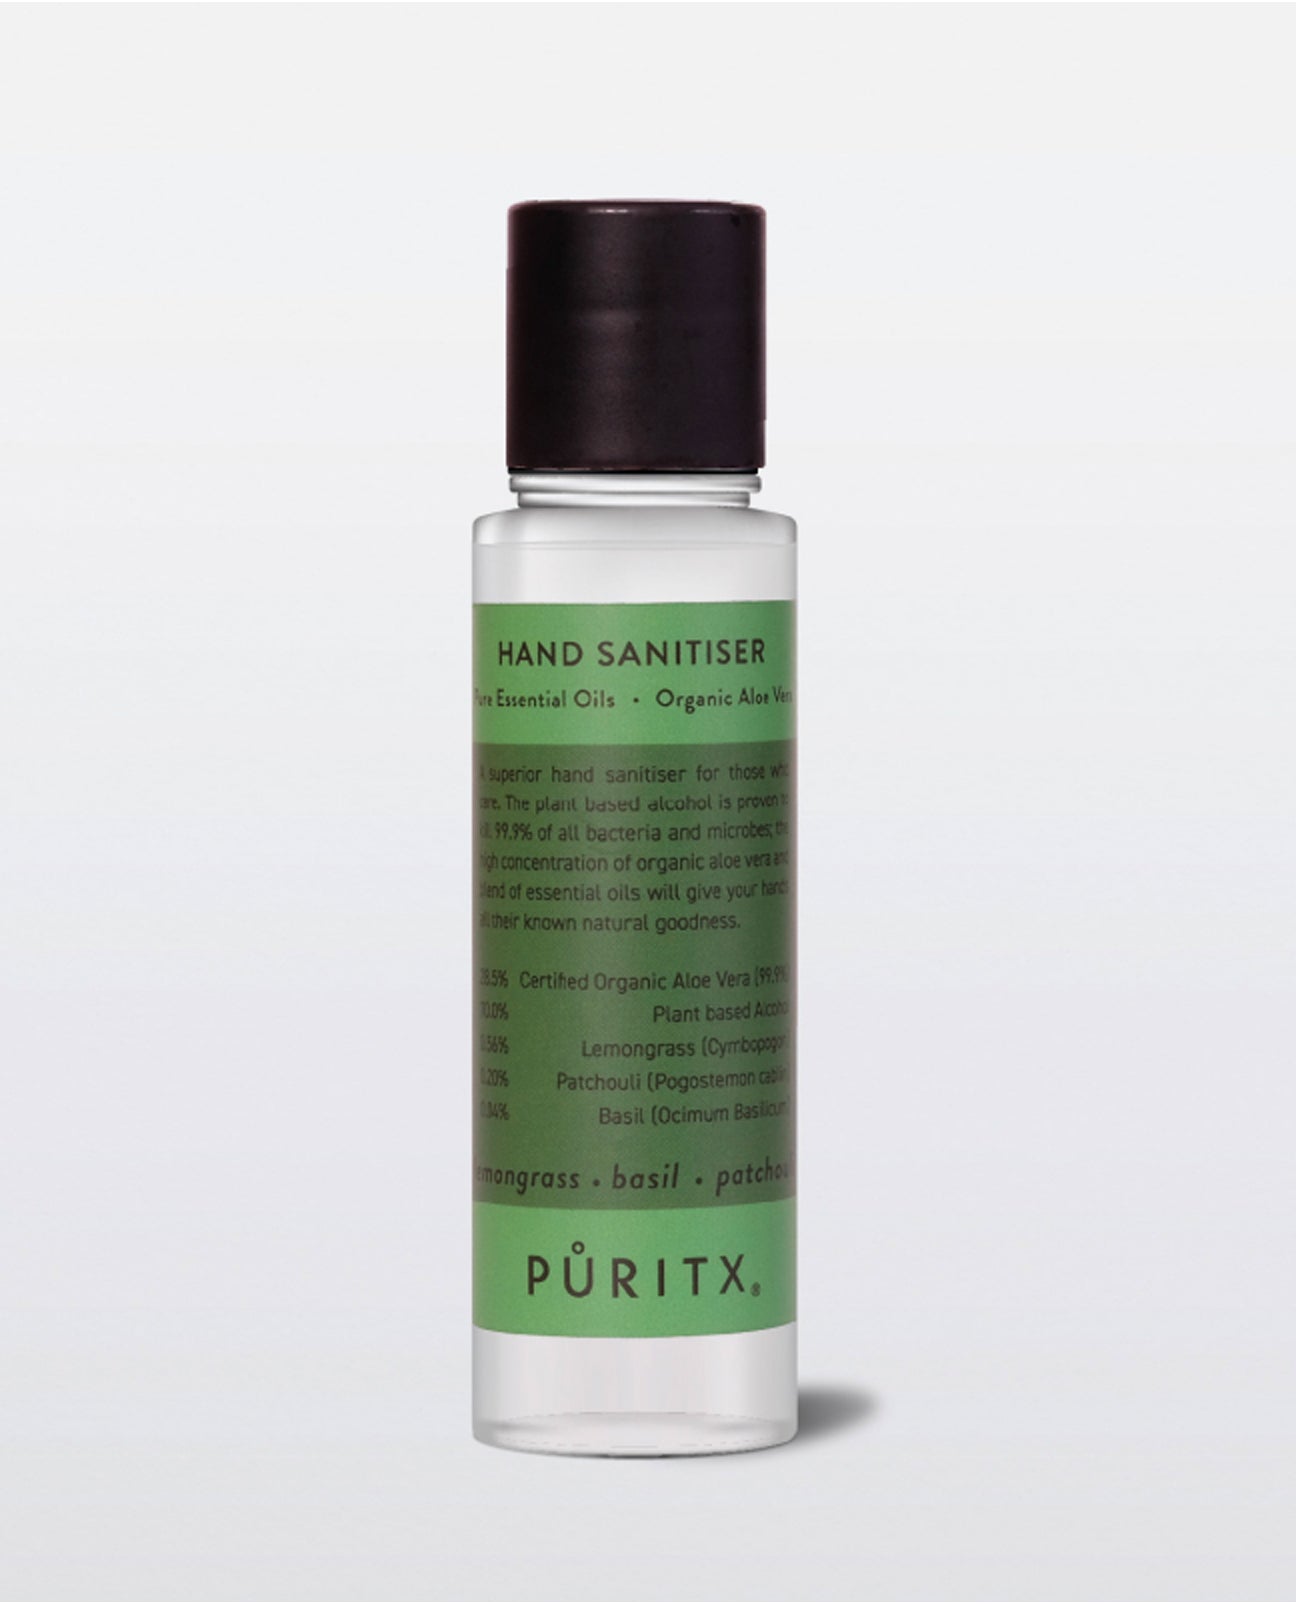 Puritx Hand Sanitiser 60ml - Lemongrass, Patchouli & Basil